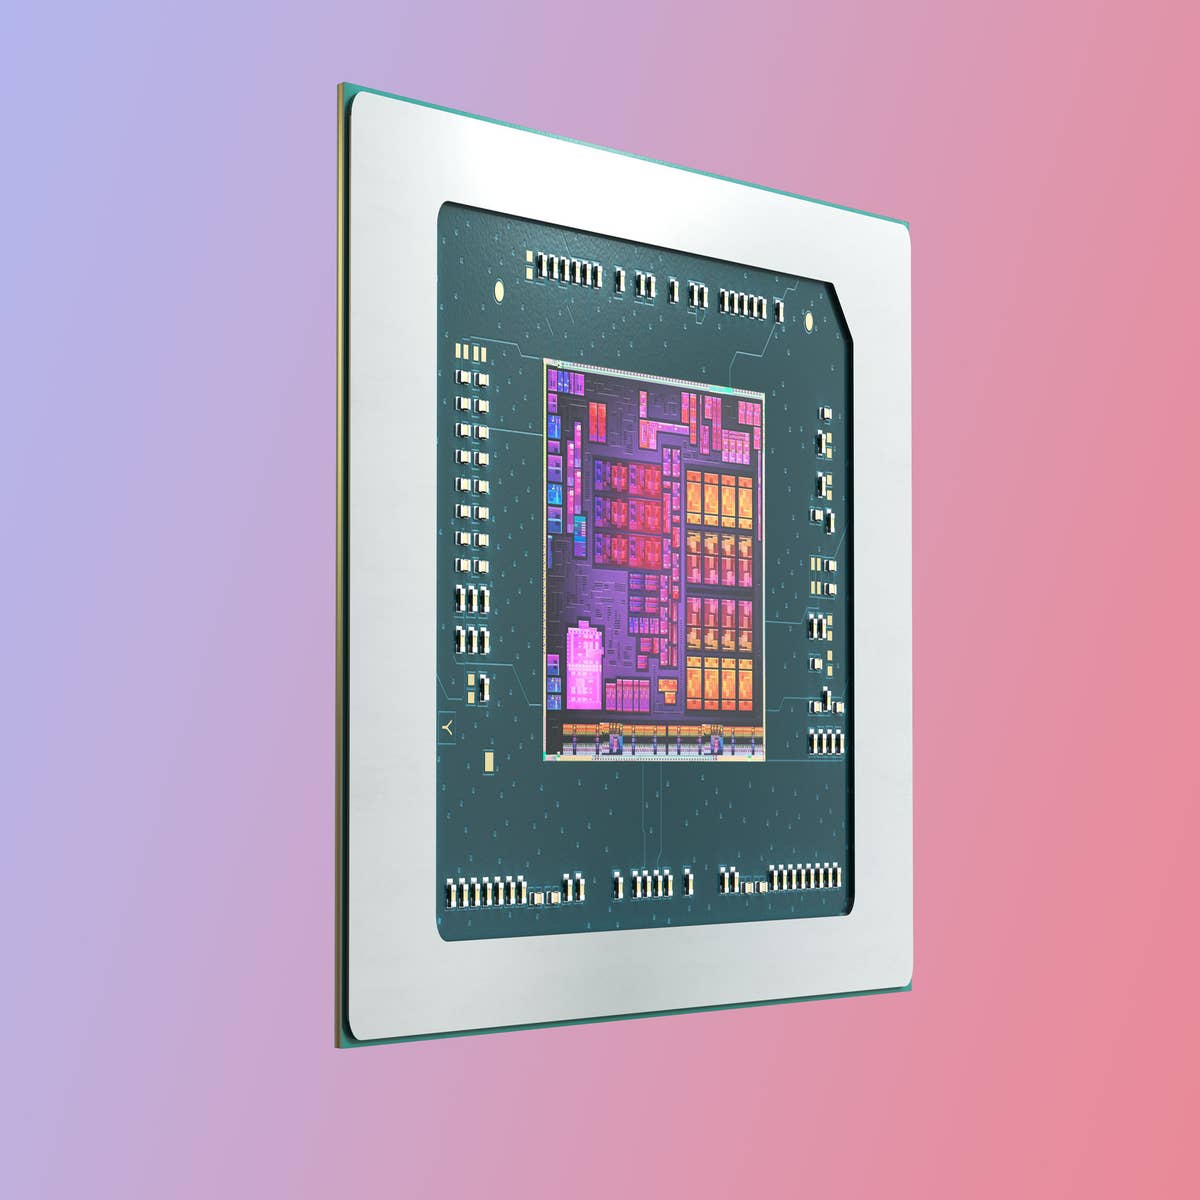 AMD Ryzen 5 8600G 4.3 GHz Six-Core AM5 Processor